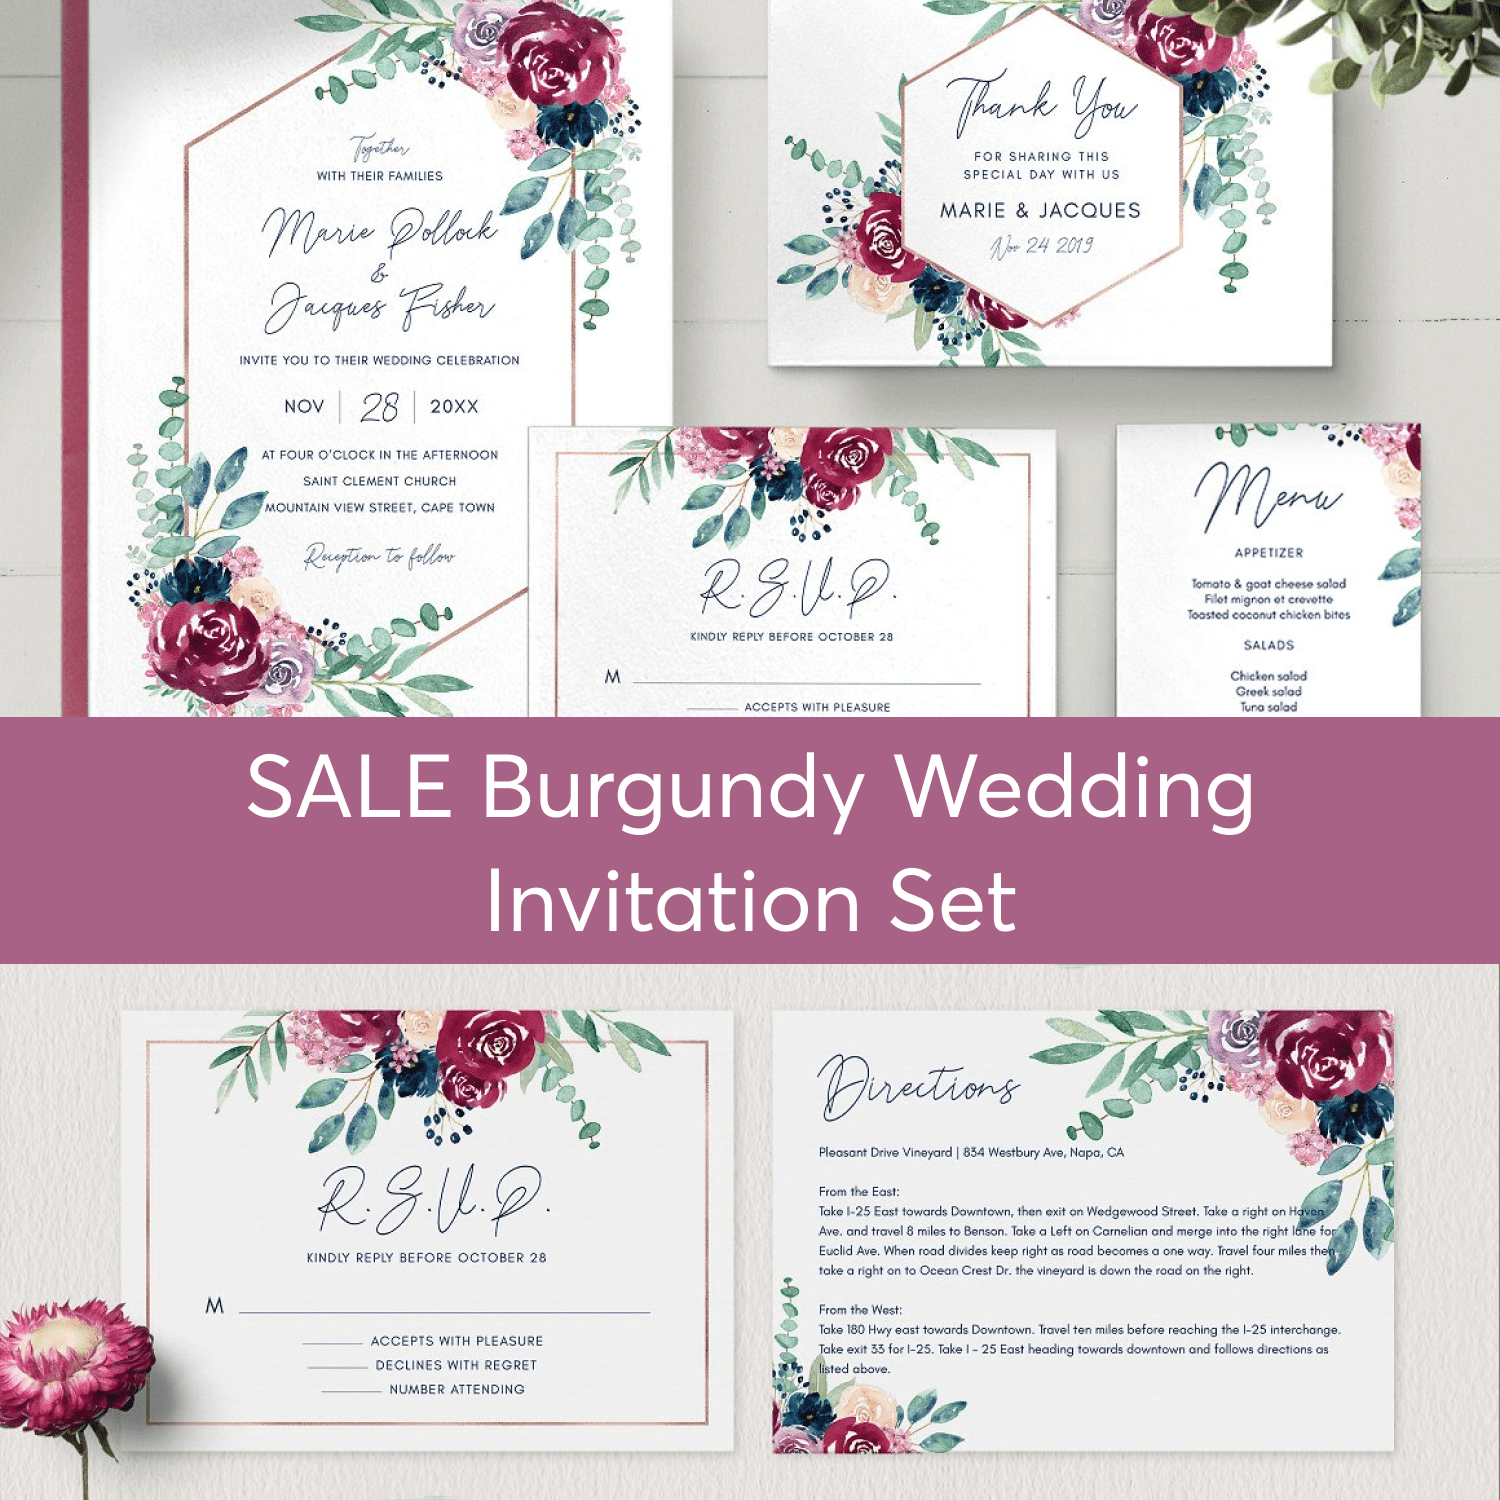 SALE Burgundy Wedding Invitation Set preview image.